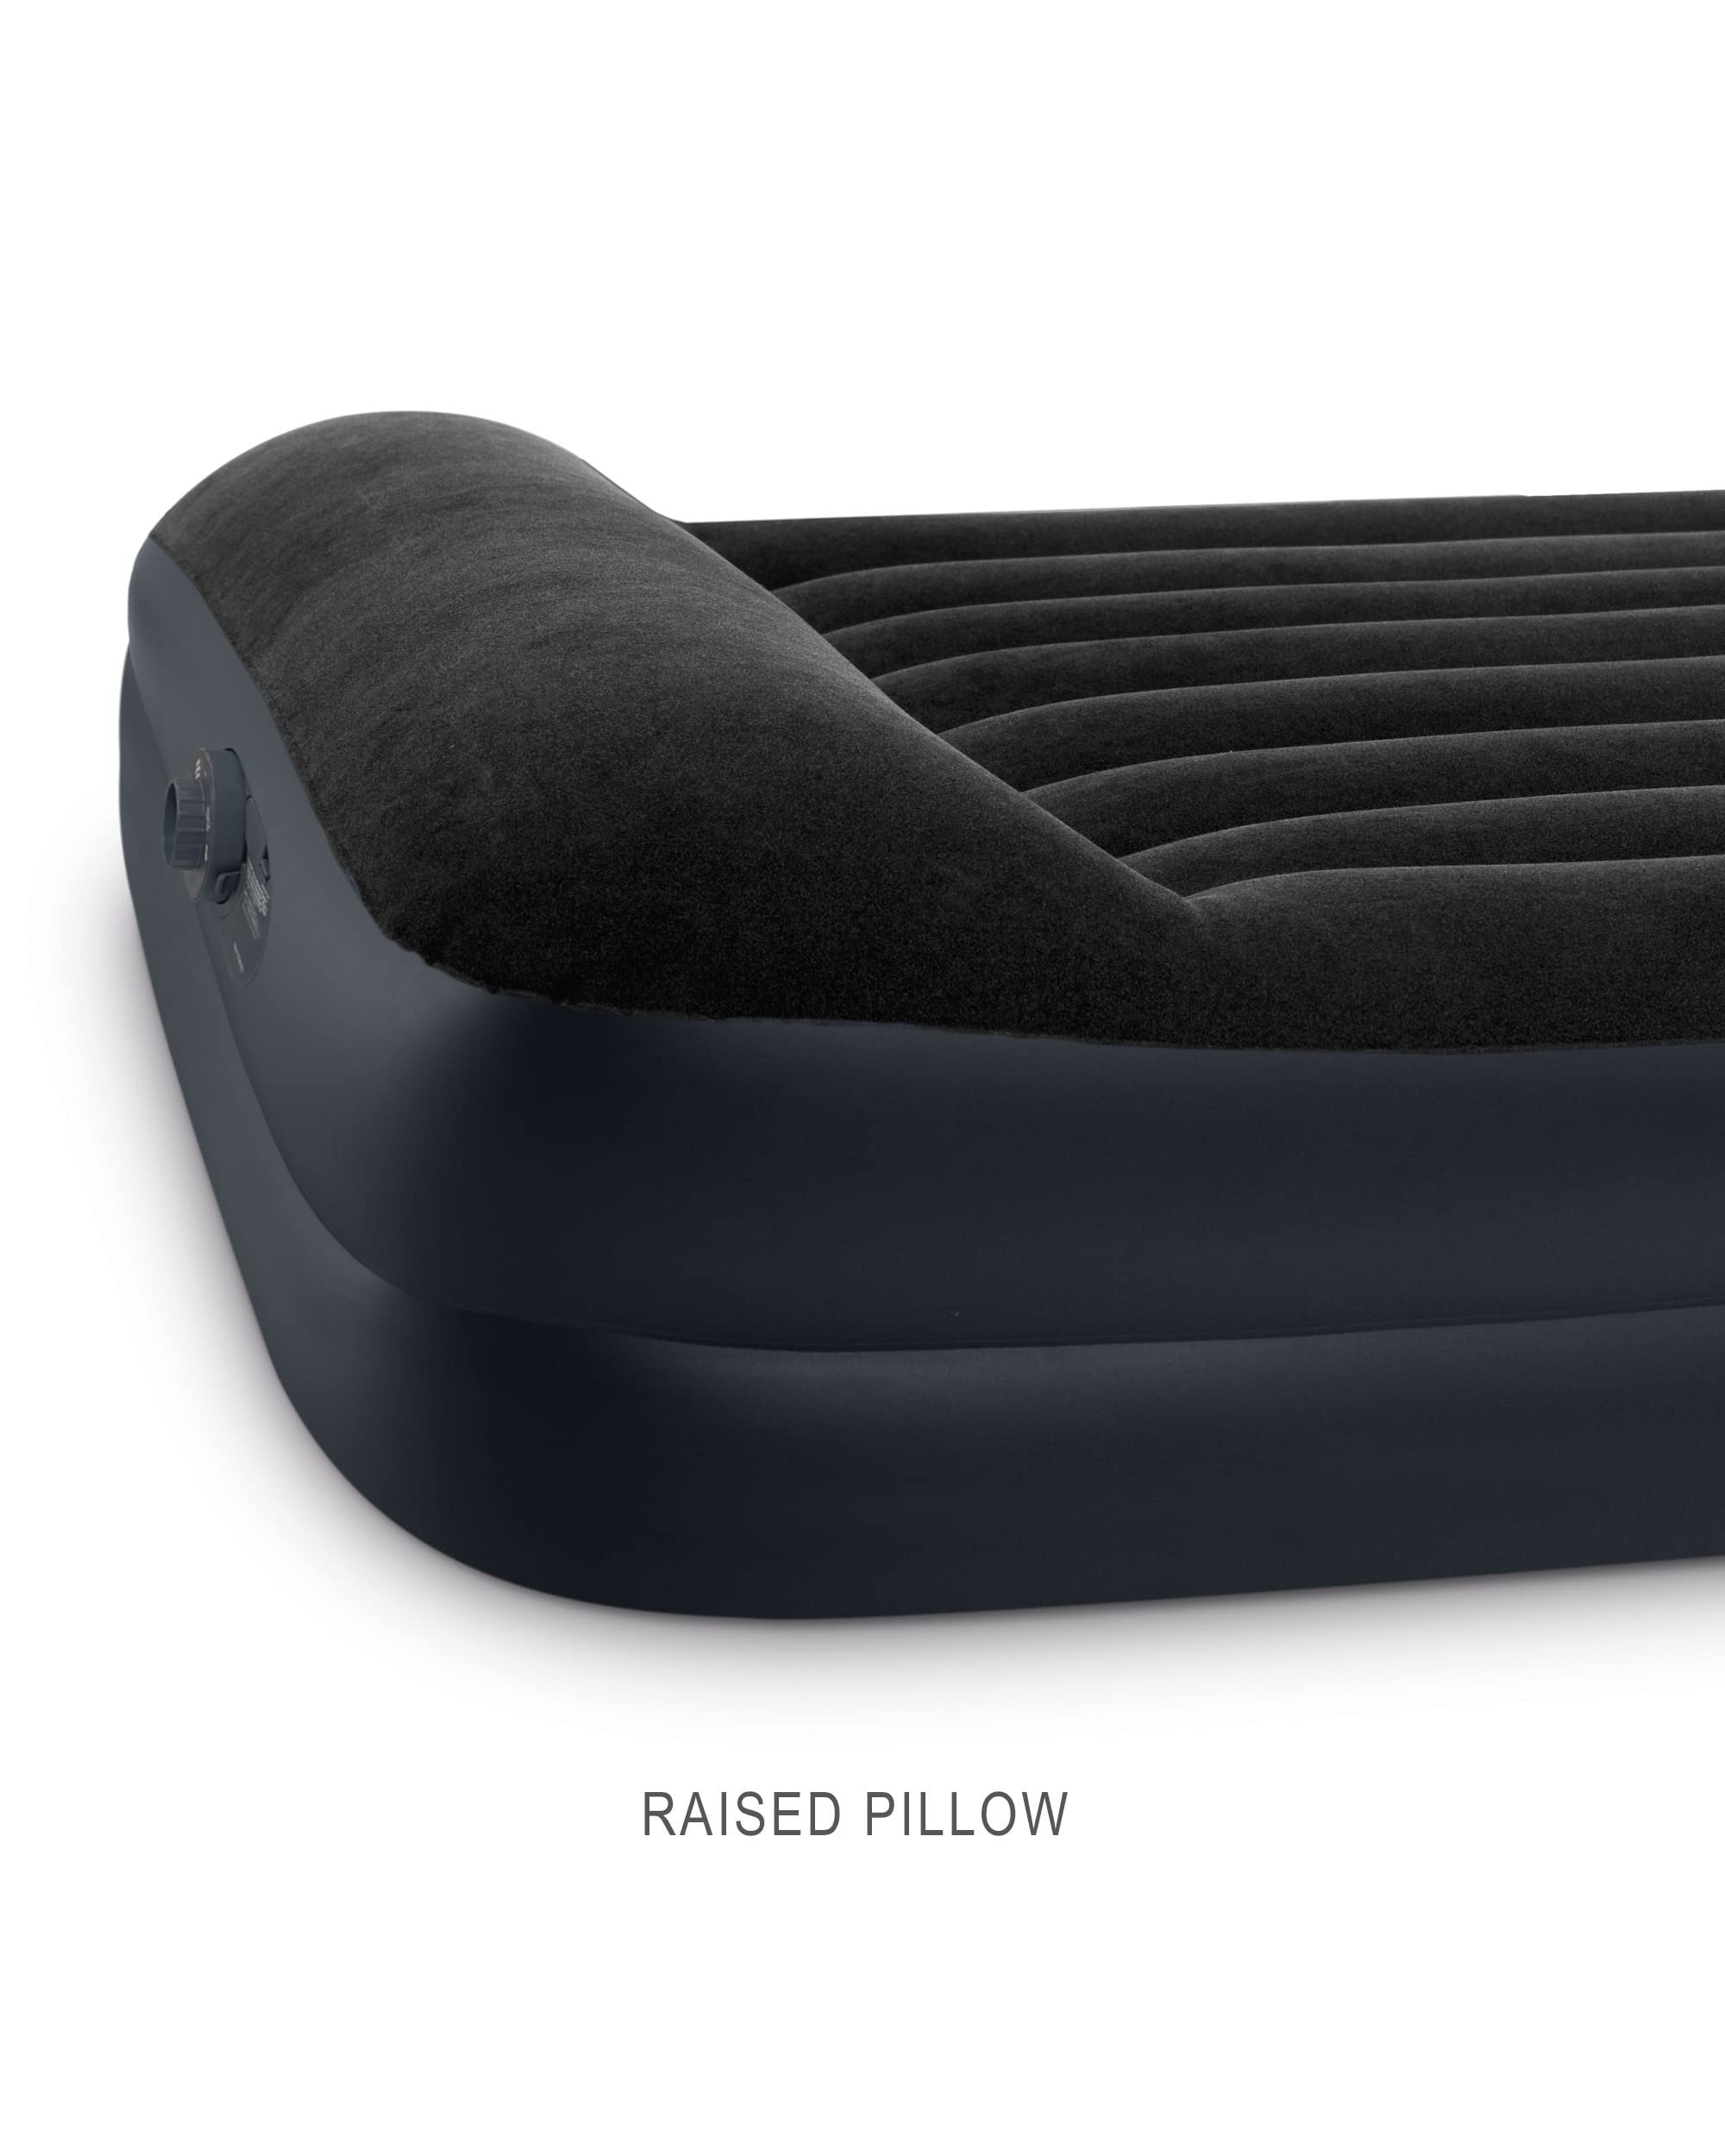 INTEX 64121EP Dura-Beam Plus Pillow Rest Air Mattress: Fiber-Tech – Twin Size – Built-in Electric Pump – 16.5in Bed Height – 300lb Weight Capacity,Navy